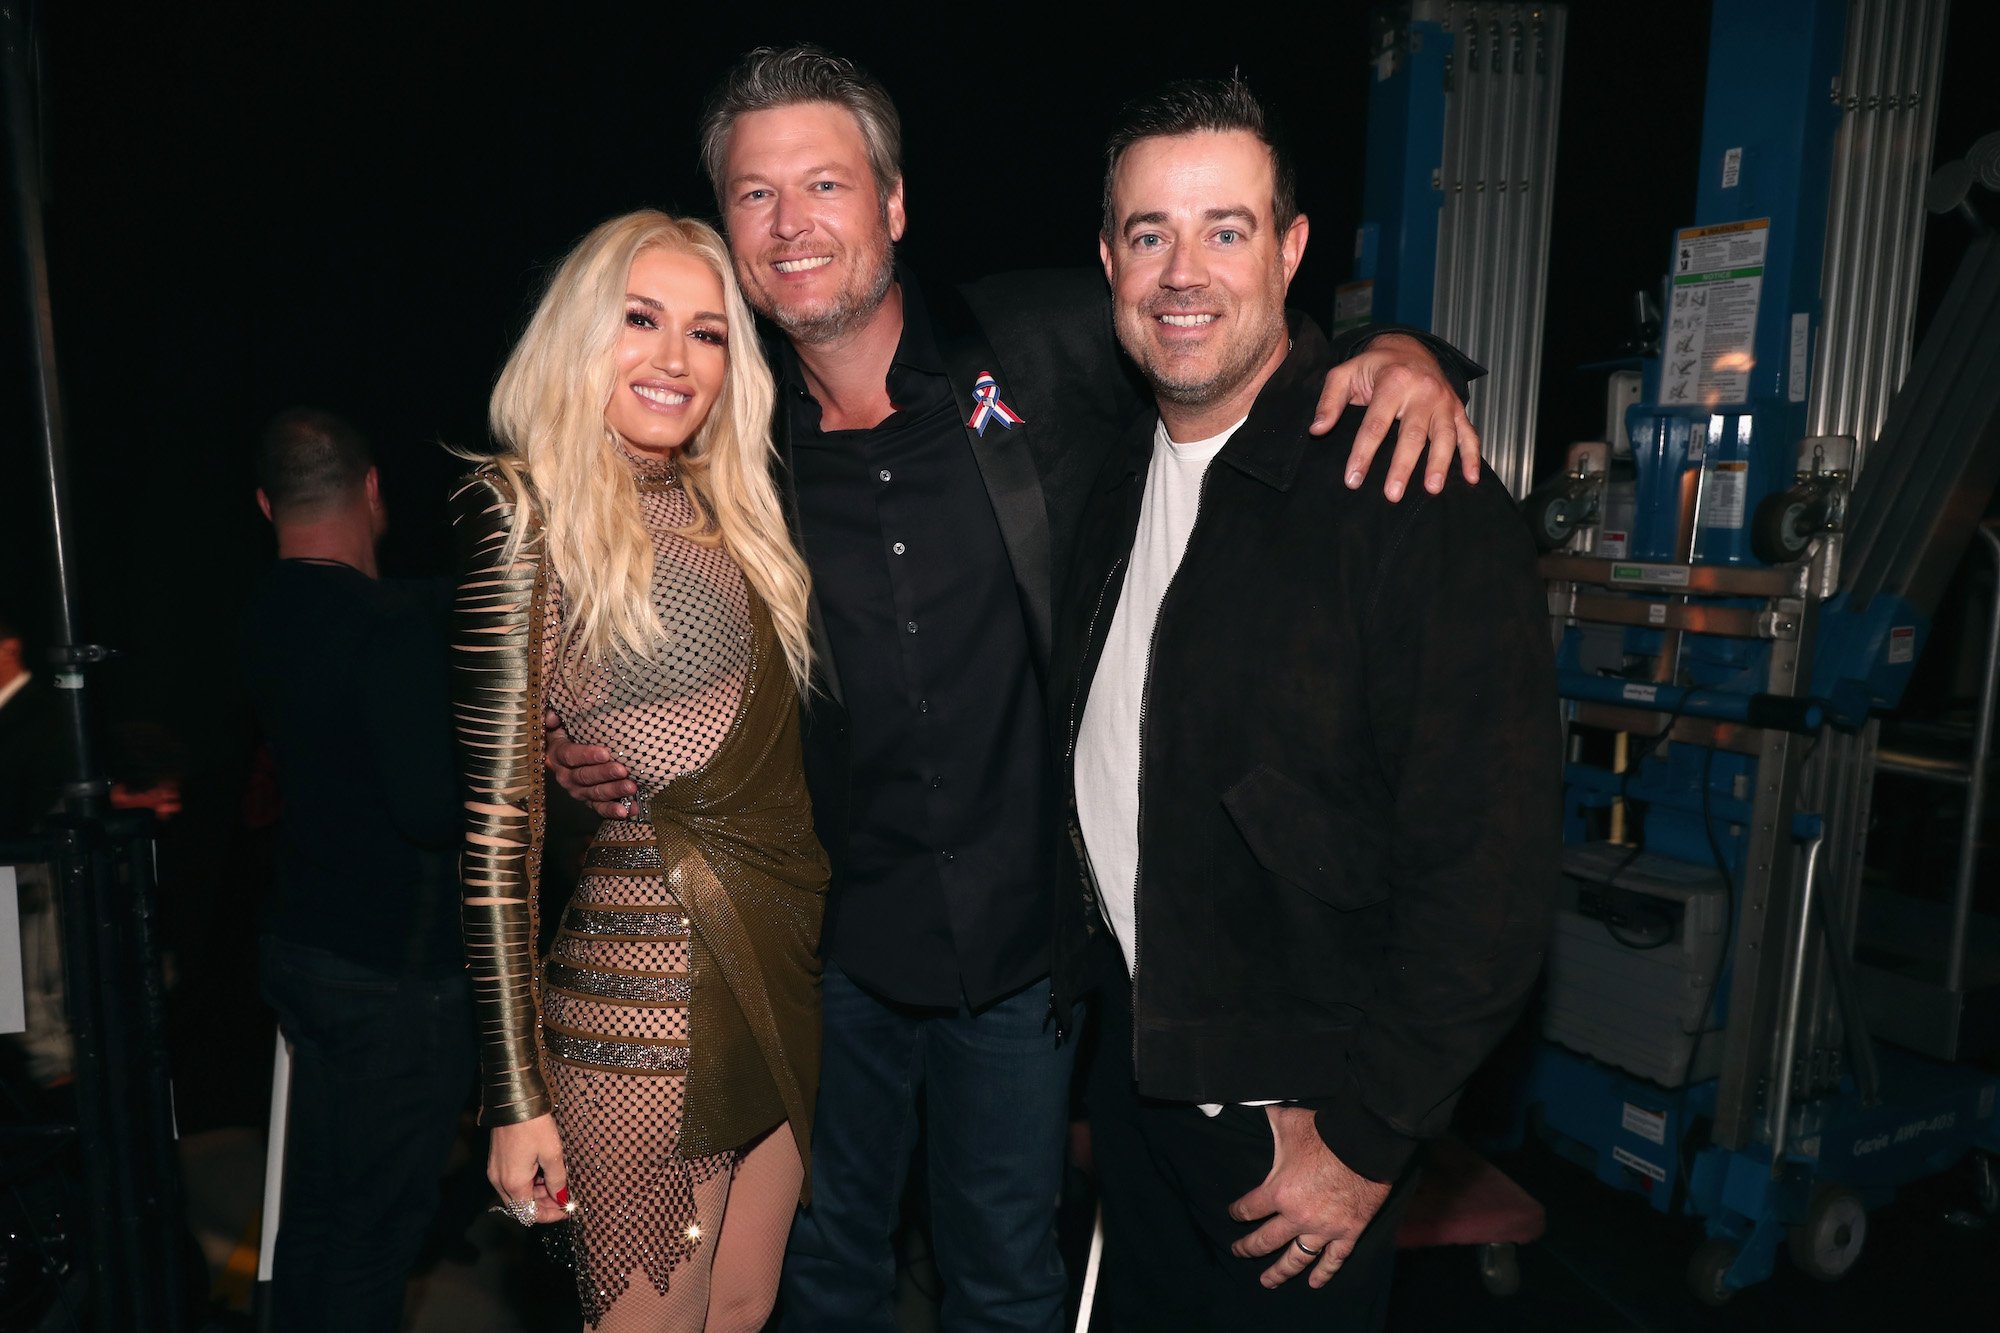 Gwen Stefani, Blake Shelton, and Carson Daly posing backstage at the 2018 E! People's Choice Awards 